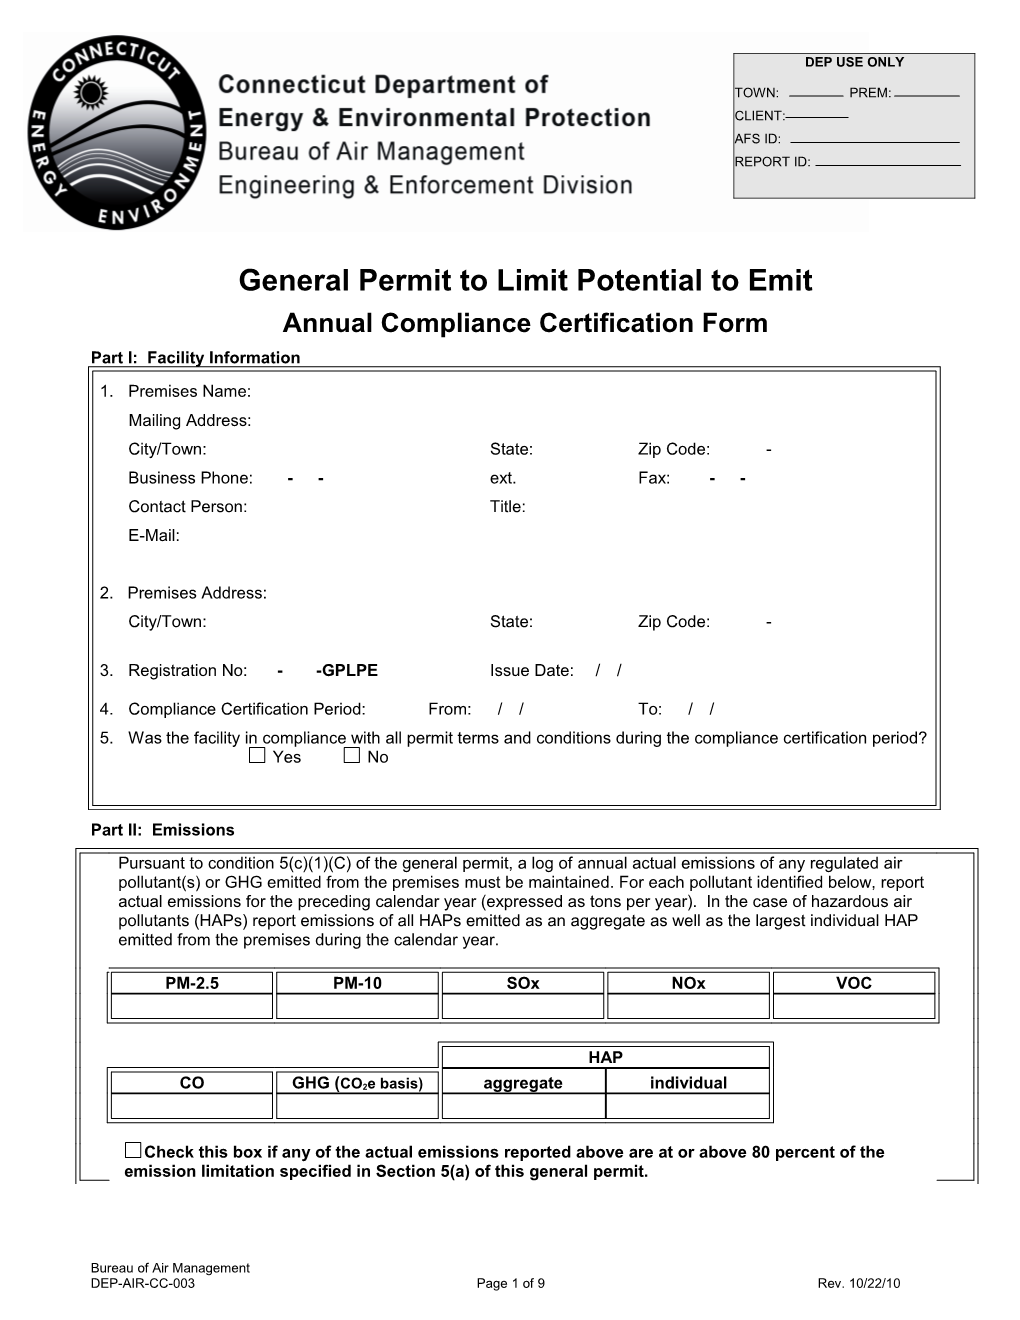 Title V Compliance Certification